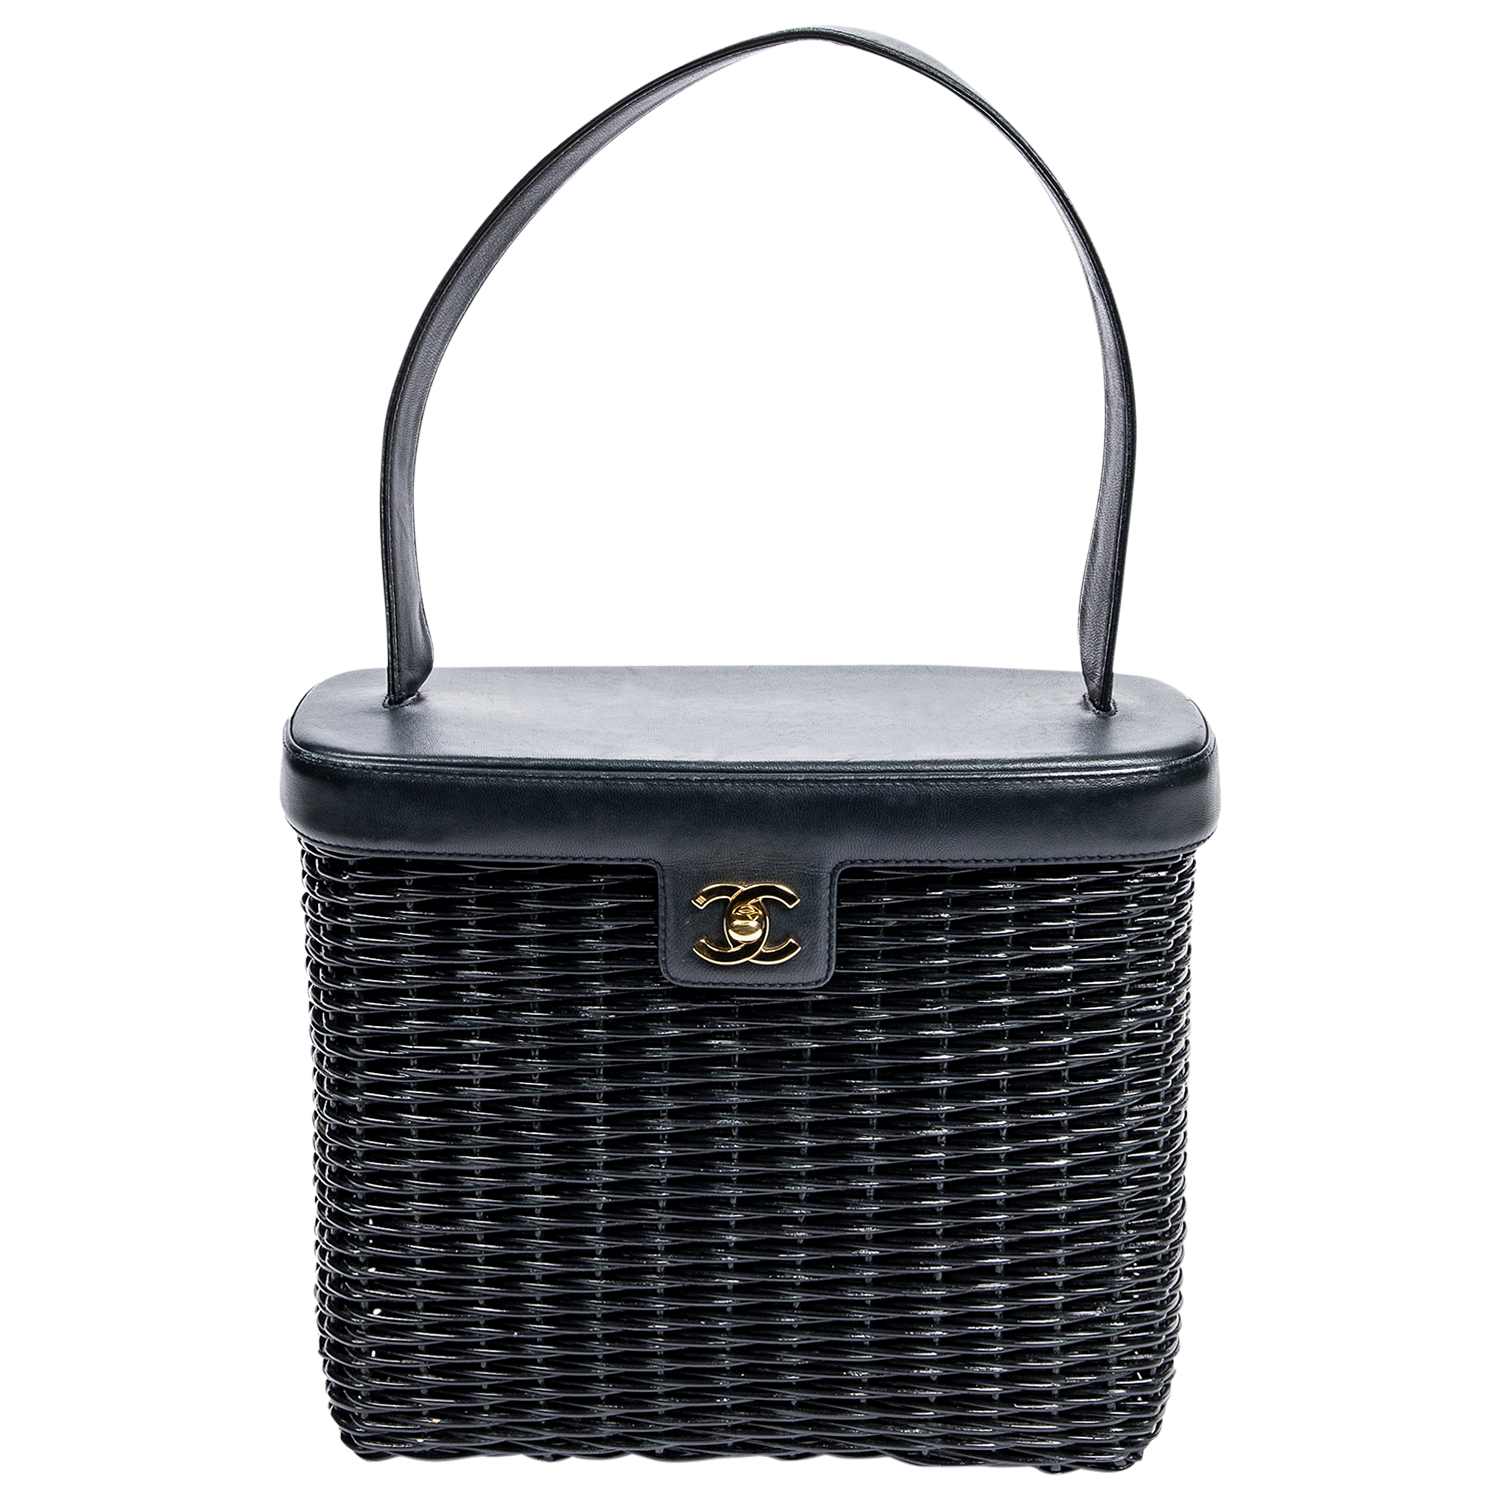 Chanel Limited Edition Black Wicker Basket Bag